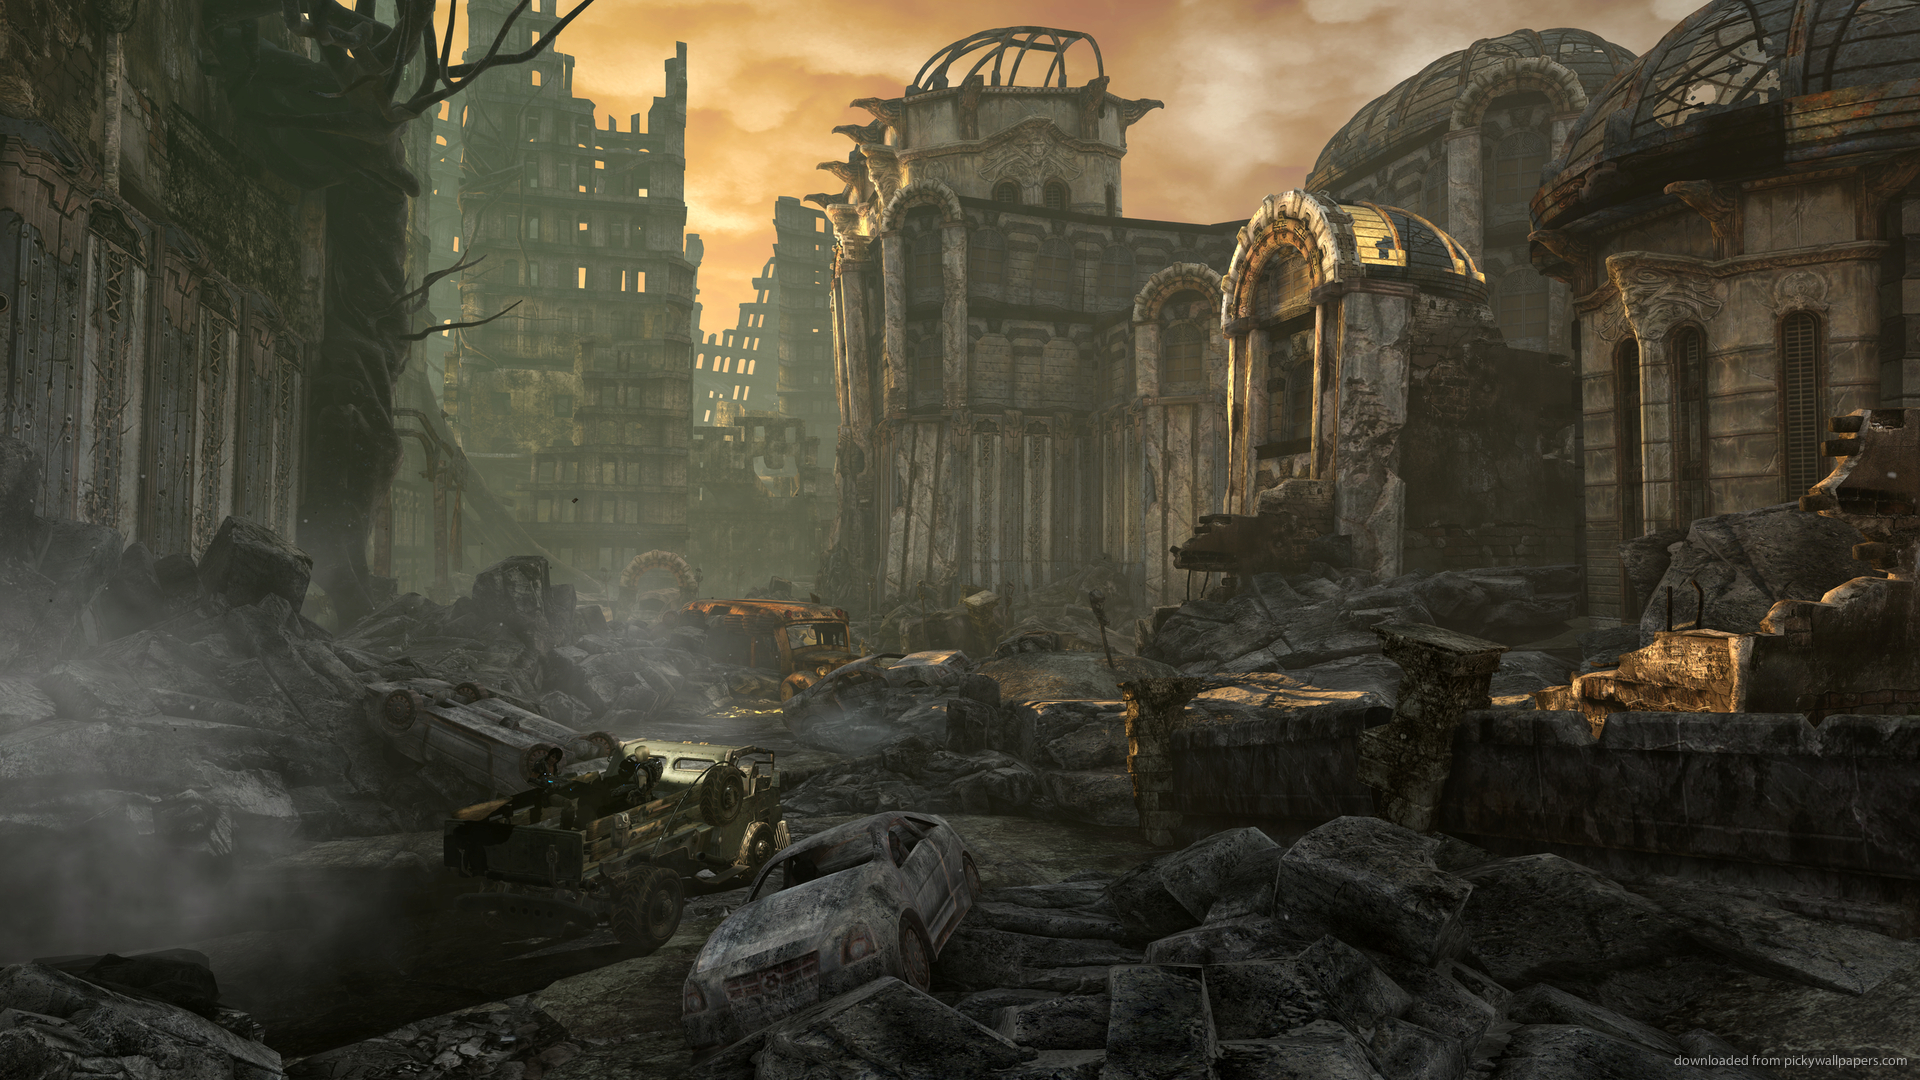 Gears Of War 3 Backgrounds